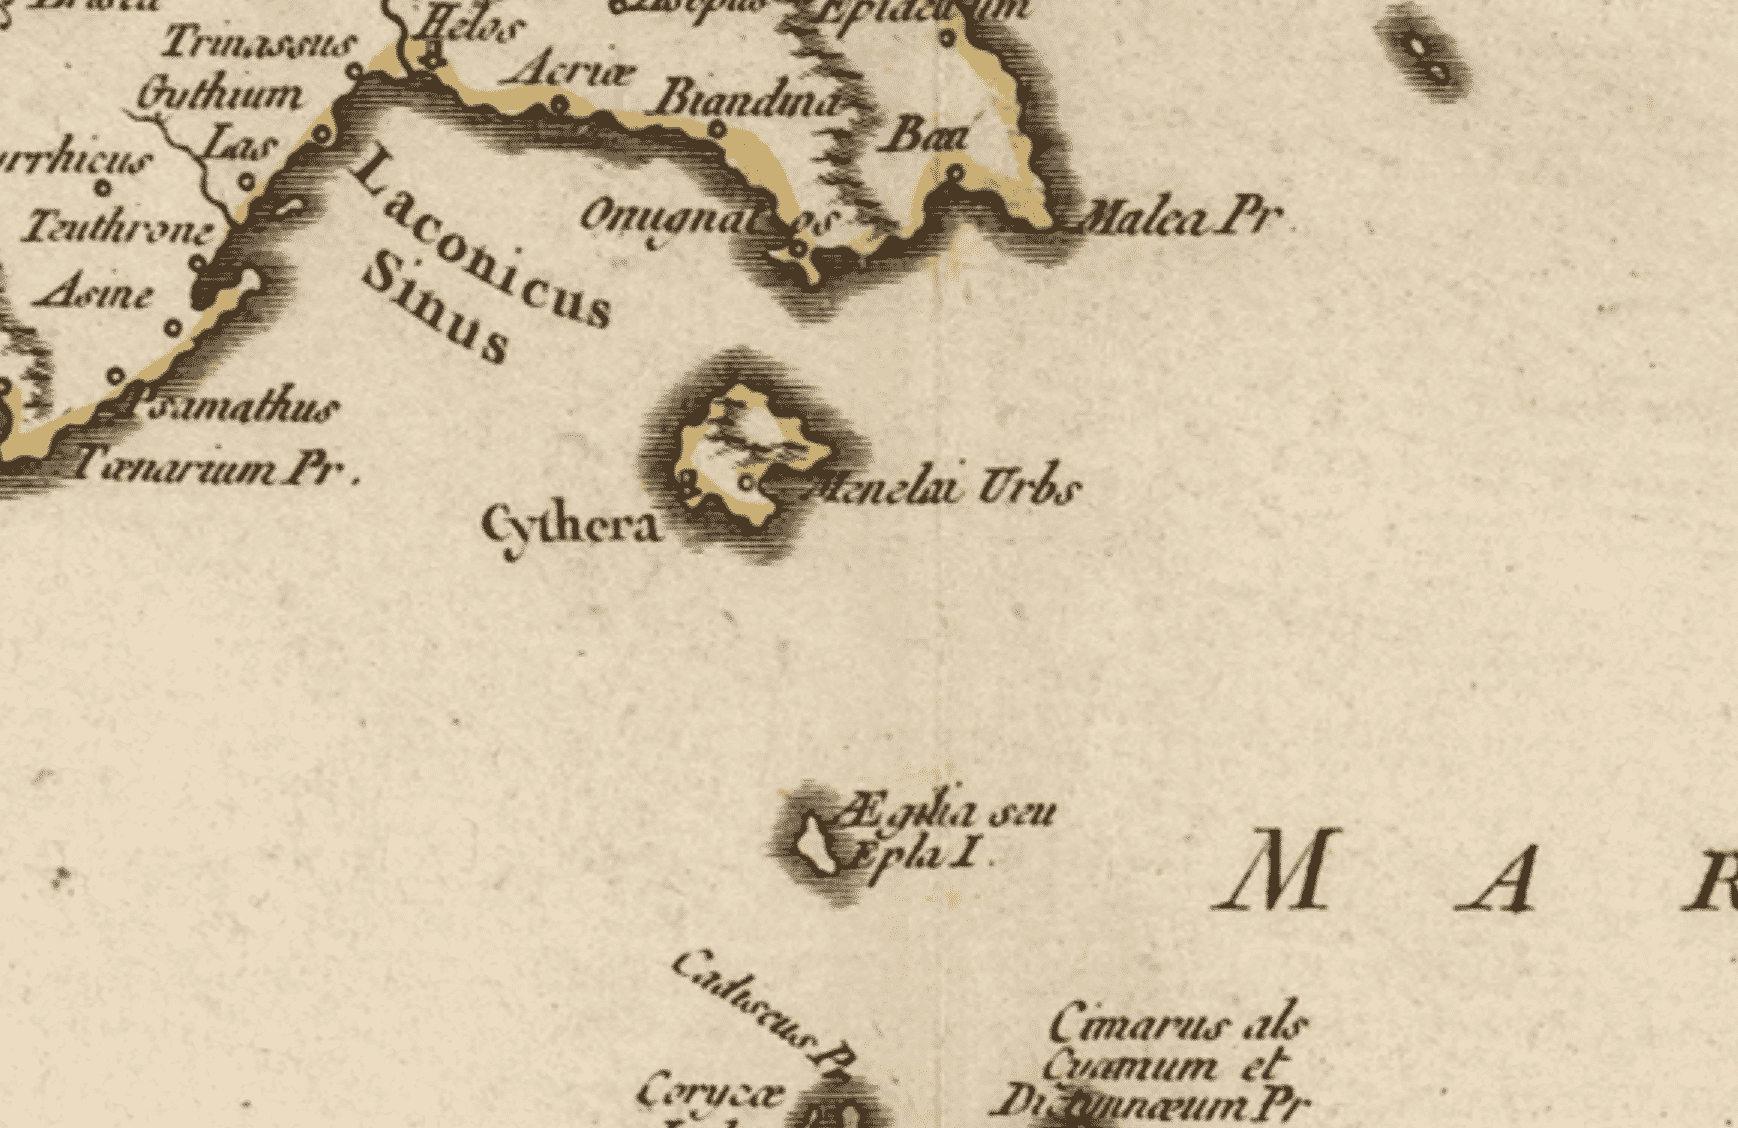 kythira-antikythira-historical-map